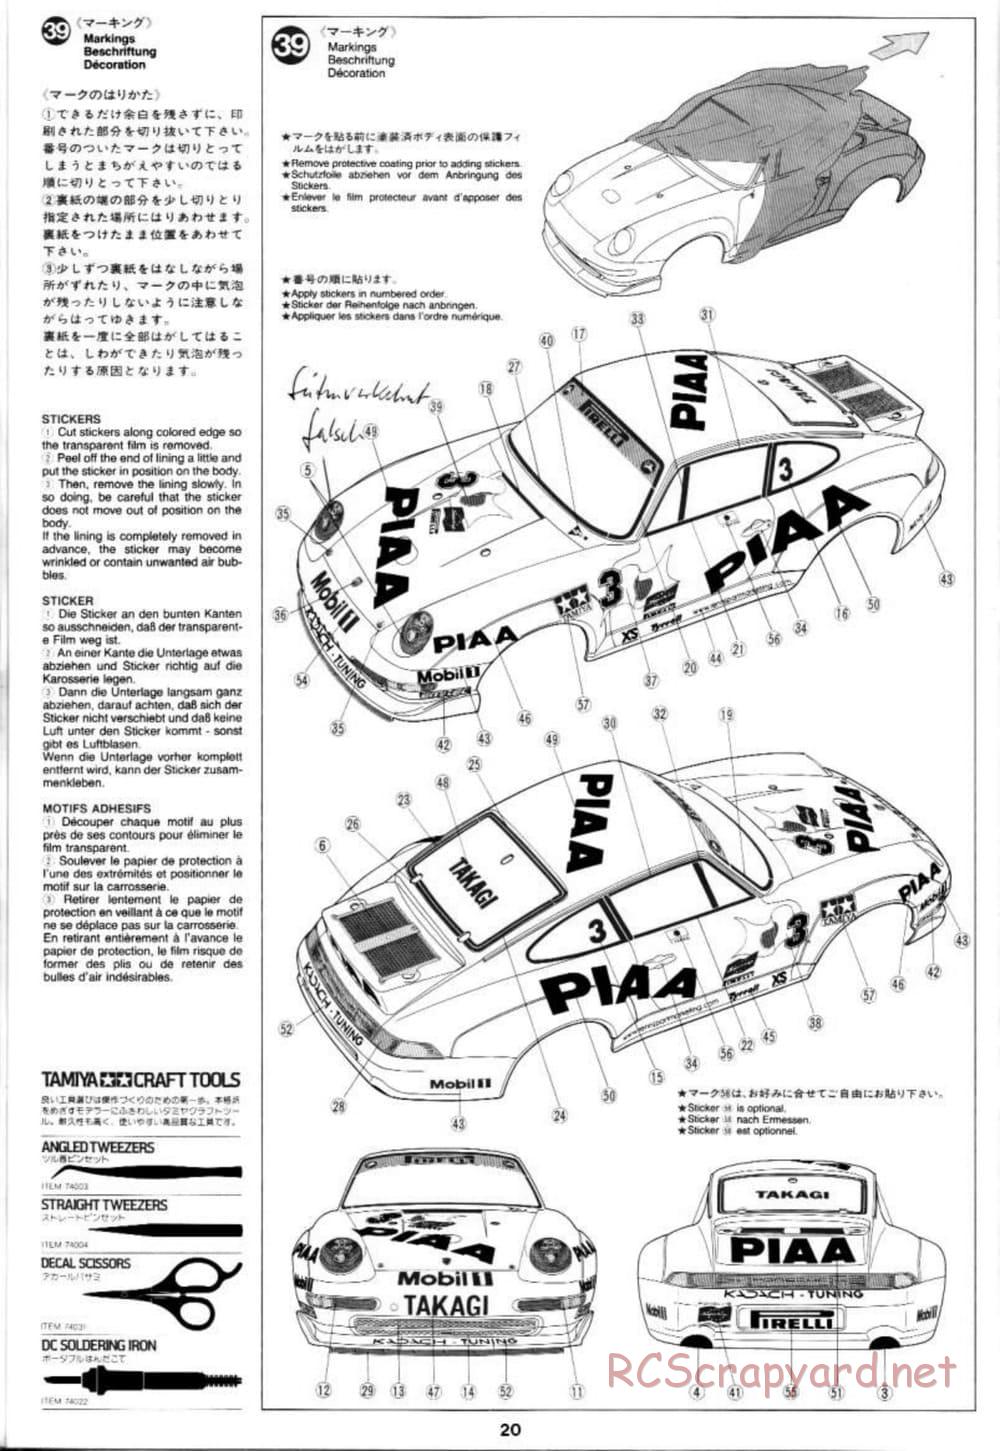 Tamiya - PIAA Porsche 911 - TA-03RS Chassis - Manual - Page 20